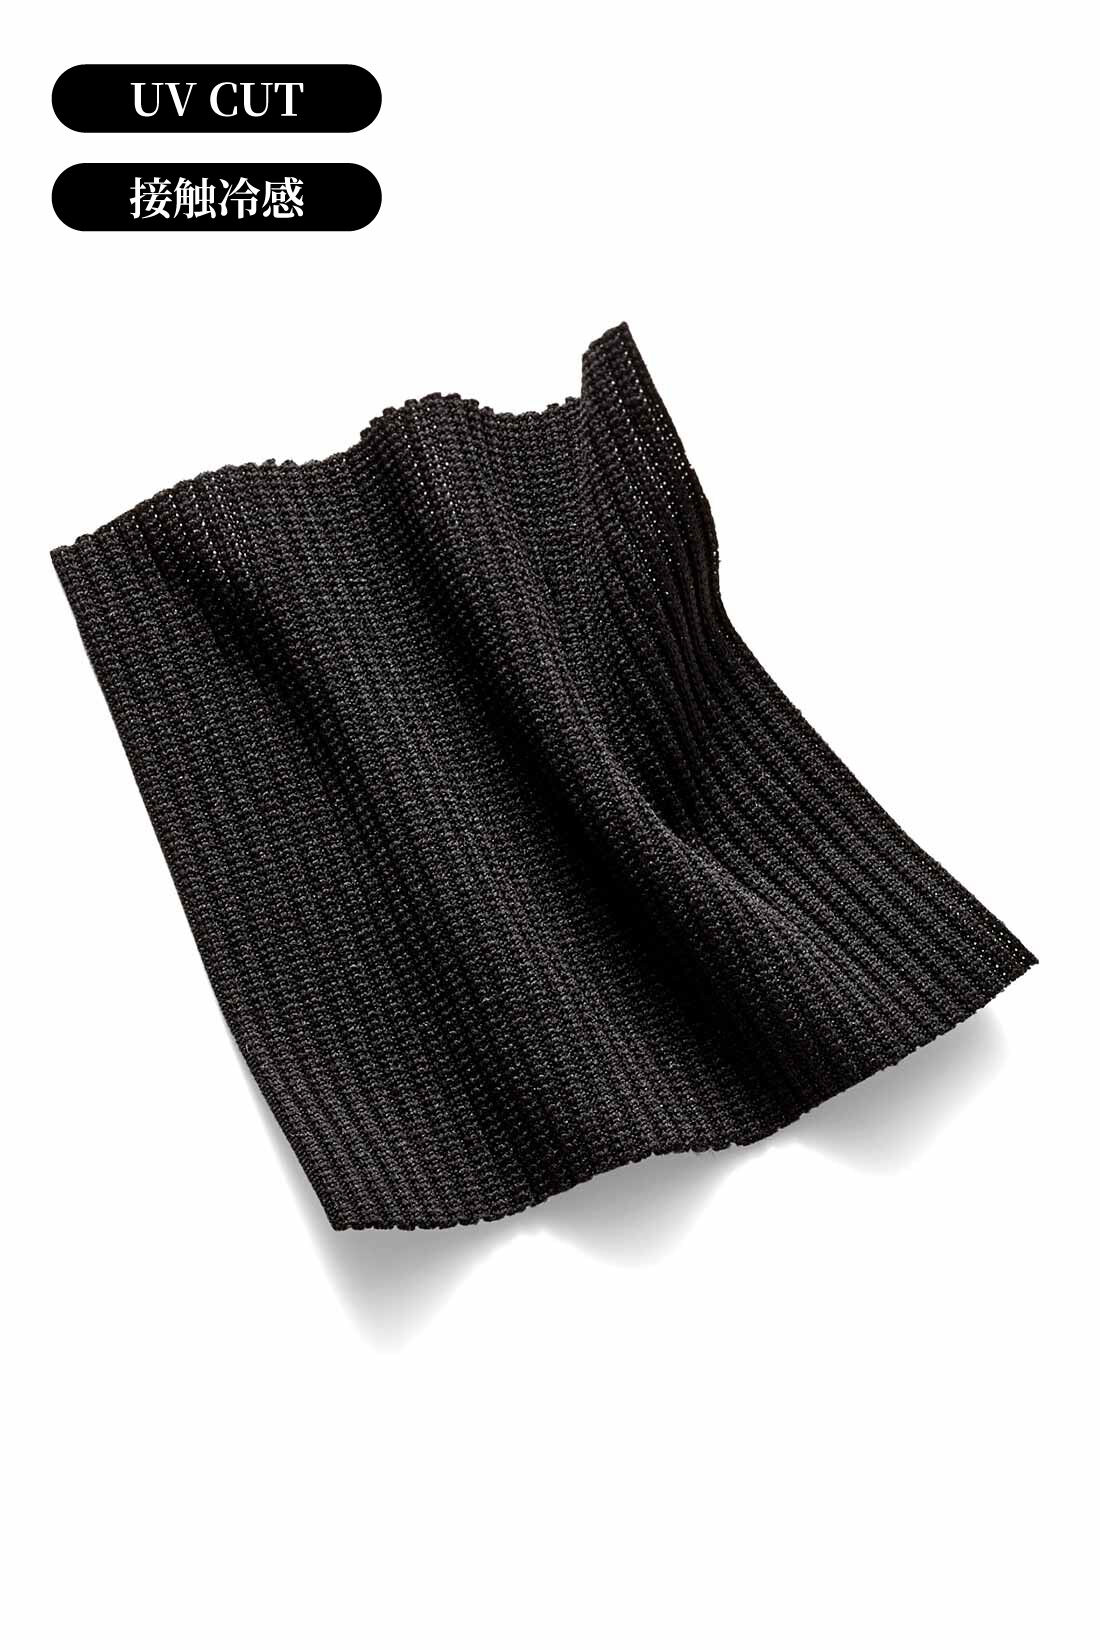 IEDIT|IEDIT[イディット]　福田麻琴さんコラボ リブ素材のスイムウェア3点セット〈ブラック〉|肌に張り付きにくく着心地も快適なストレッチのきいた細めリブ素材。洋服のように着られる上品なブラック。